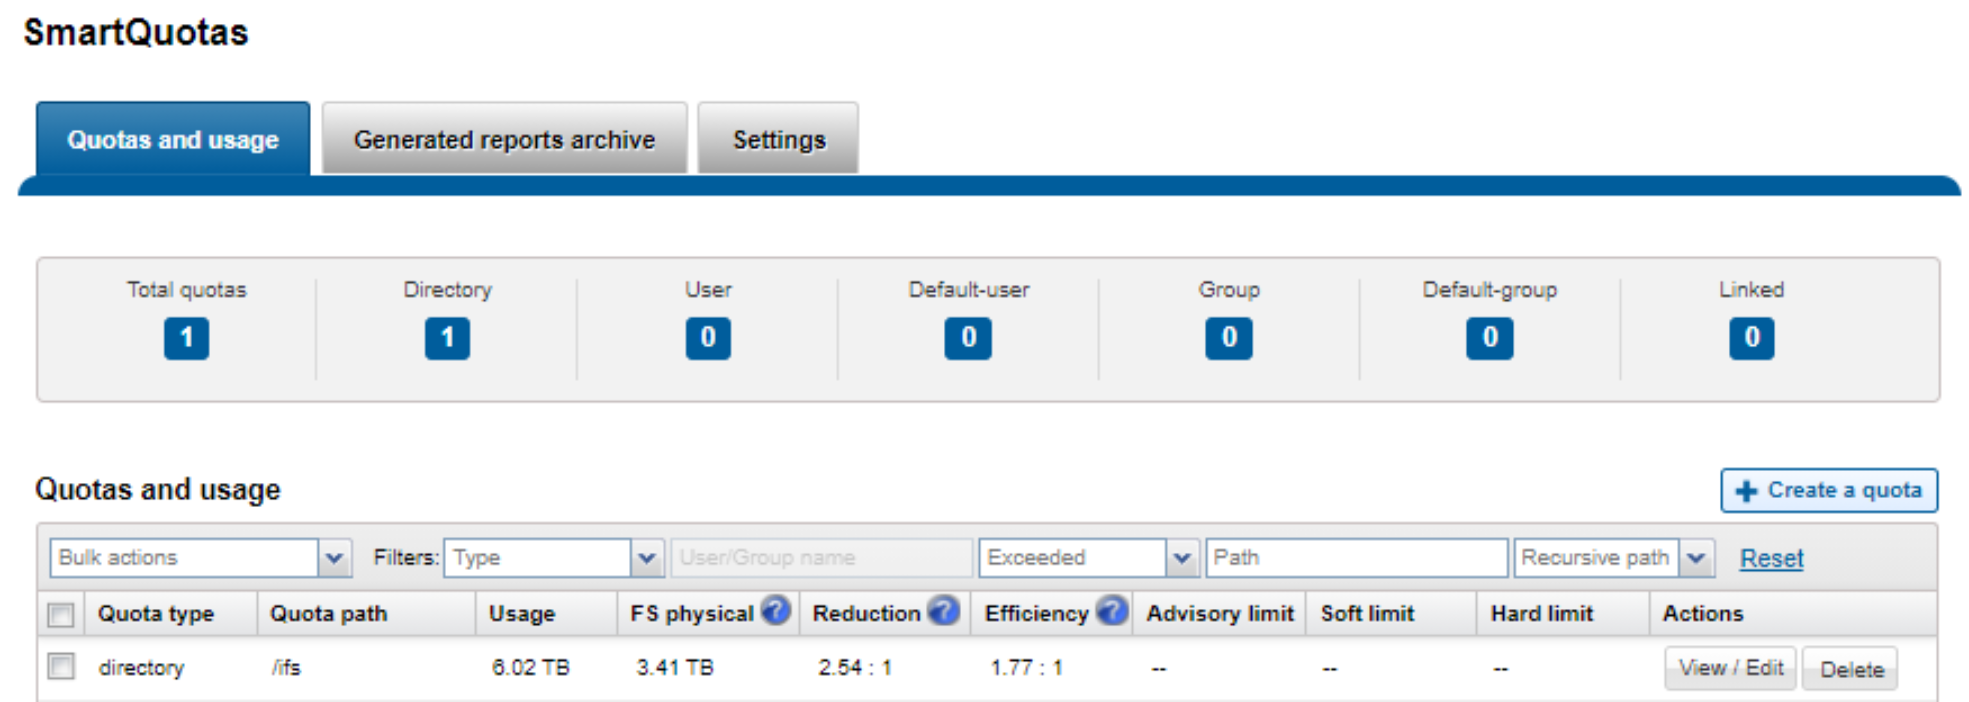 OneFS WebUI SmartQuotas quotas and usage status screenshot, detailing efficiency and data reduction ratios.